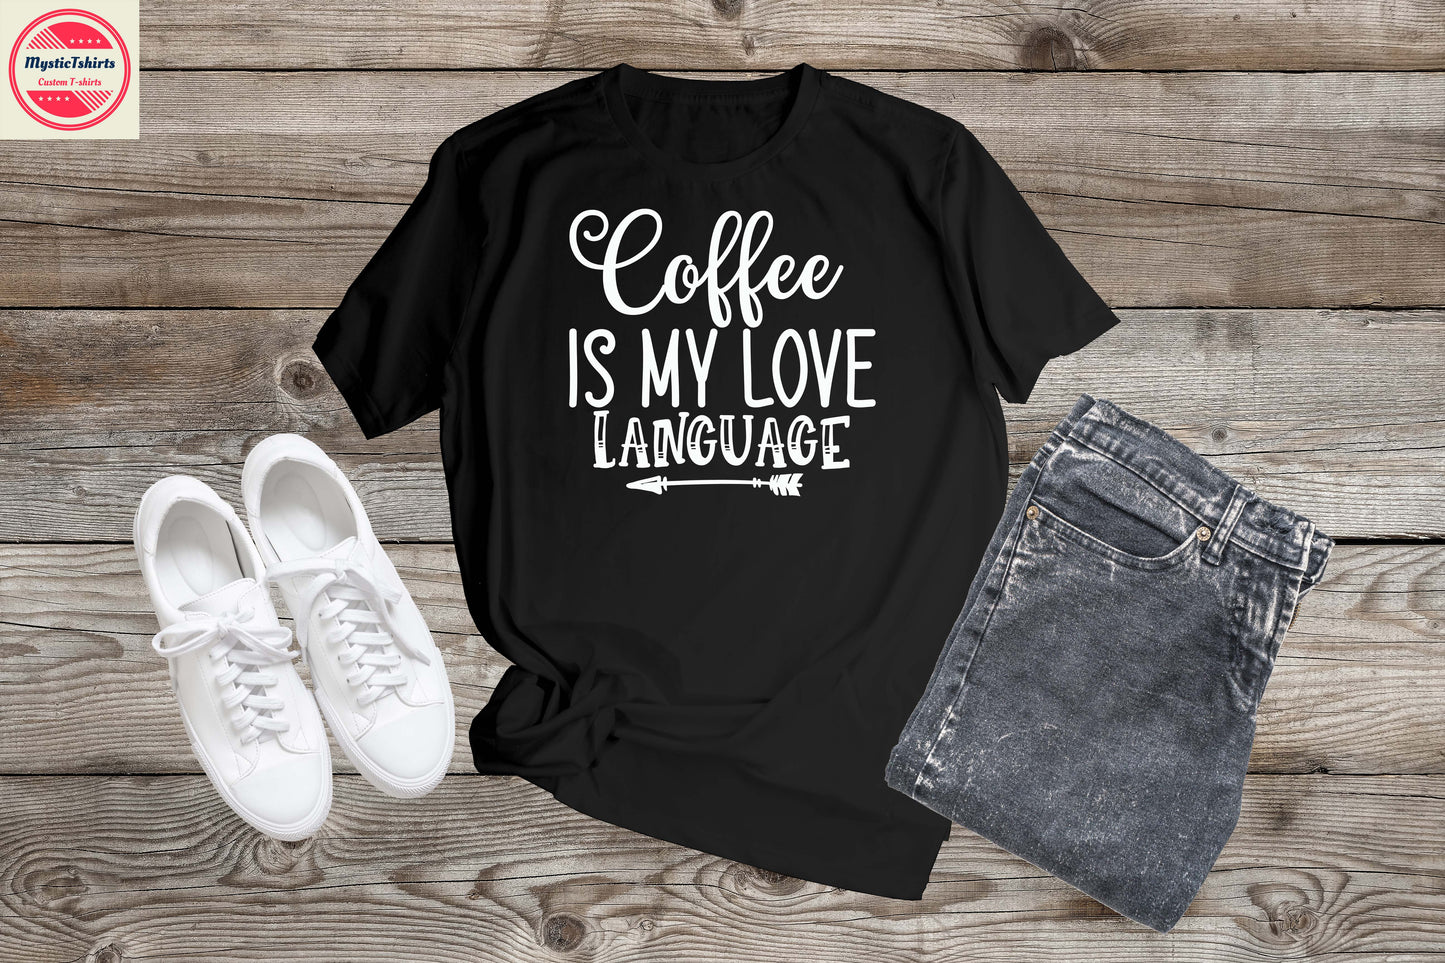 059. COFFEE IS MY LOVE LANGUAGE, Custom Made Shirt, Personalized T-Shirt, Custom Text, Make Your Own Shirt, Custom Tee